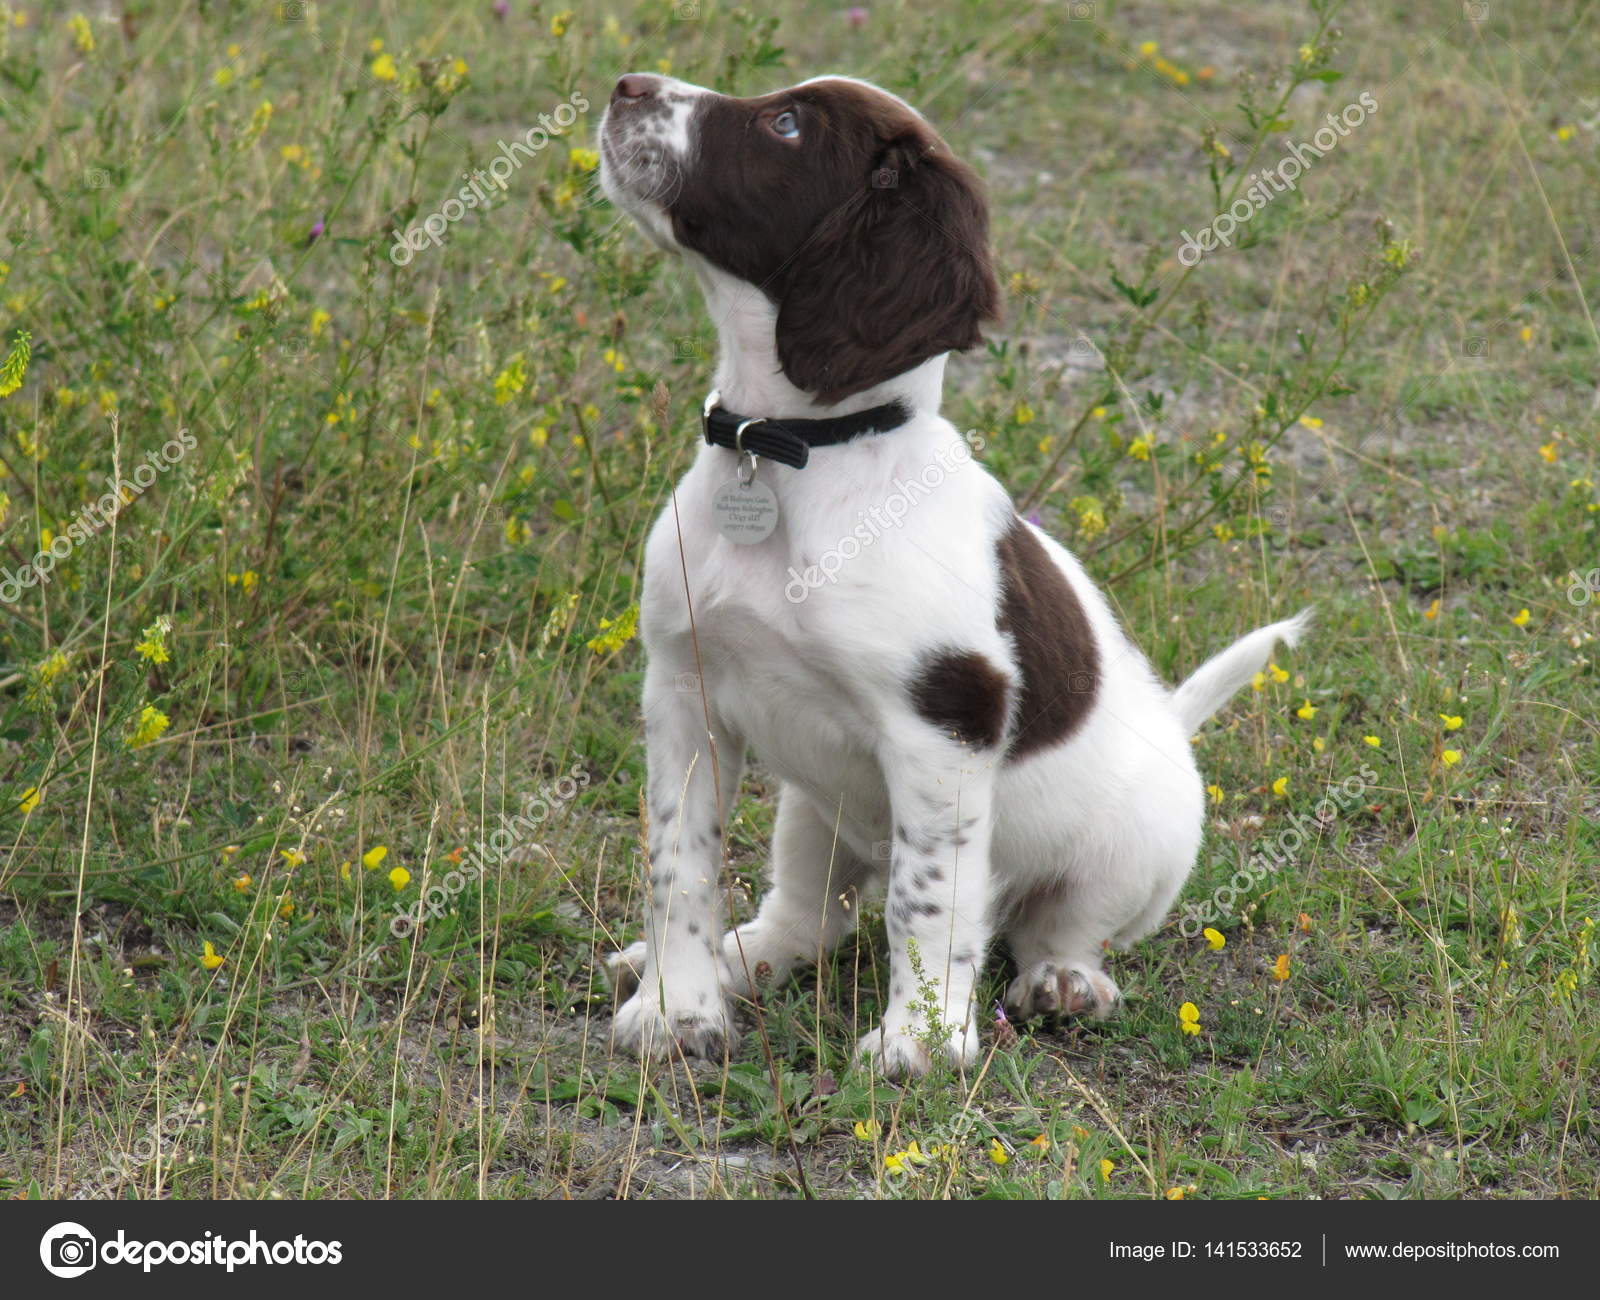 liver and white springer spaniel puppy